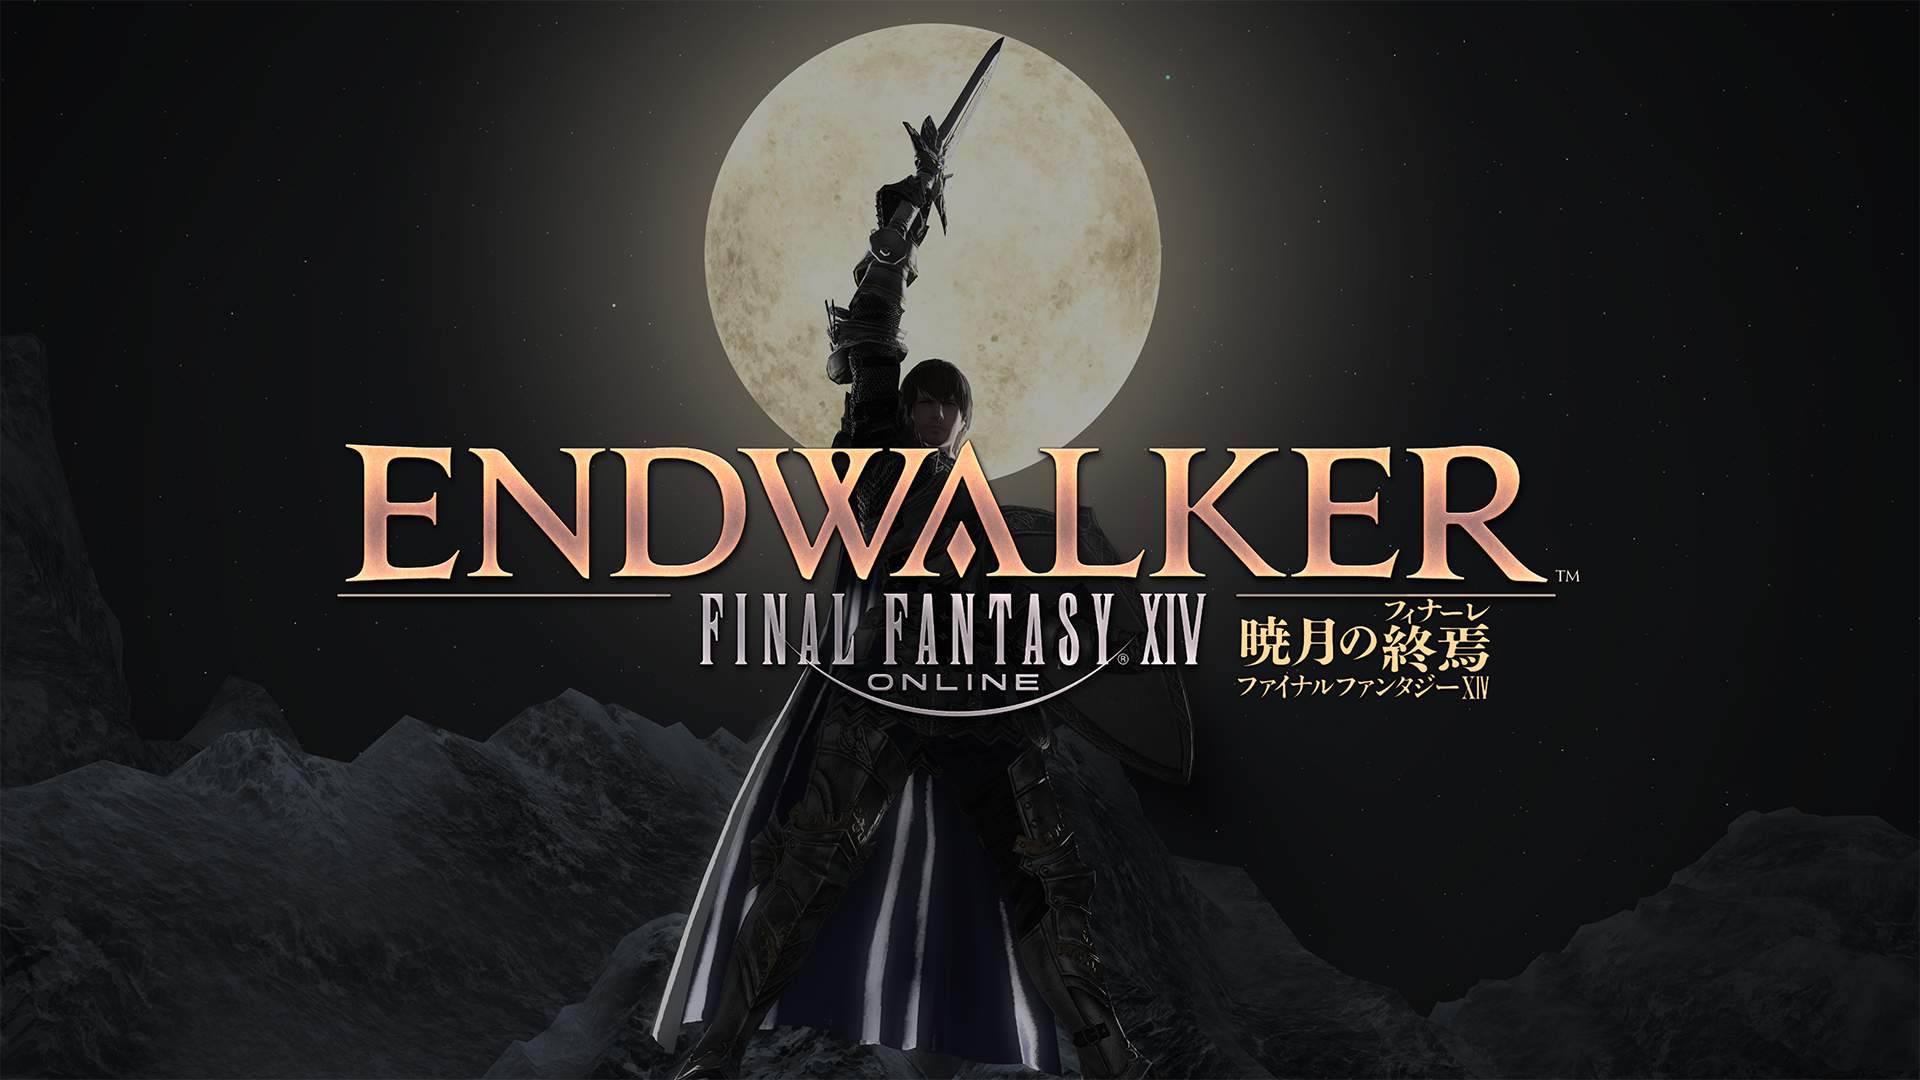 Endwalker Official Benchmark Available Now!